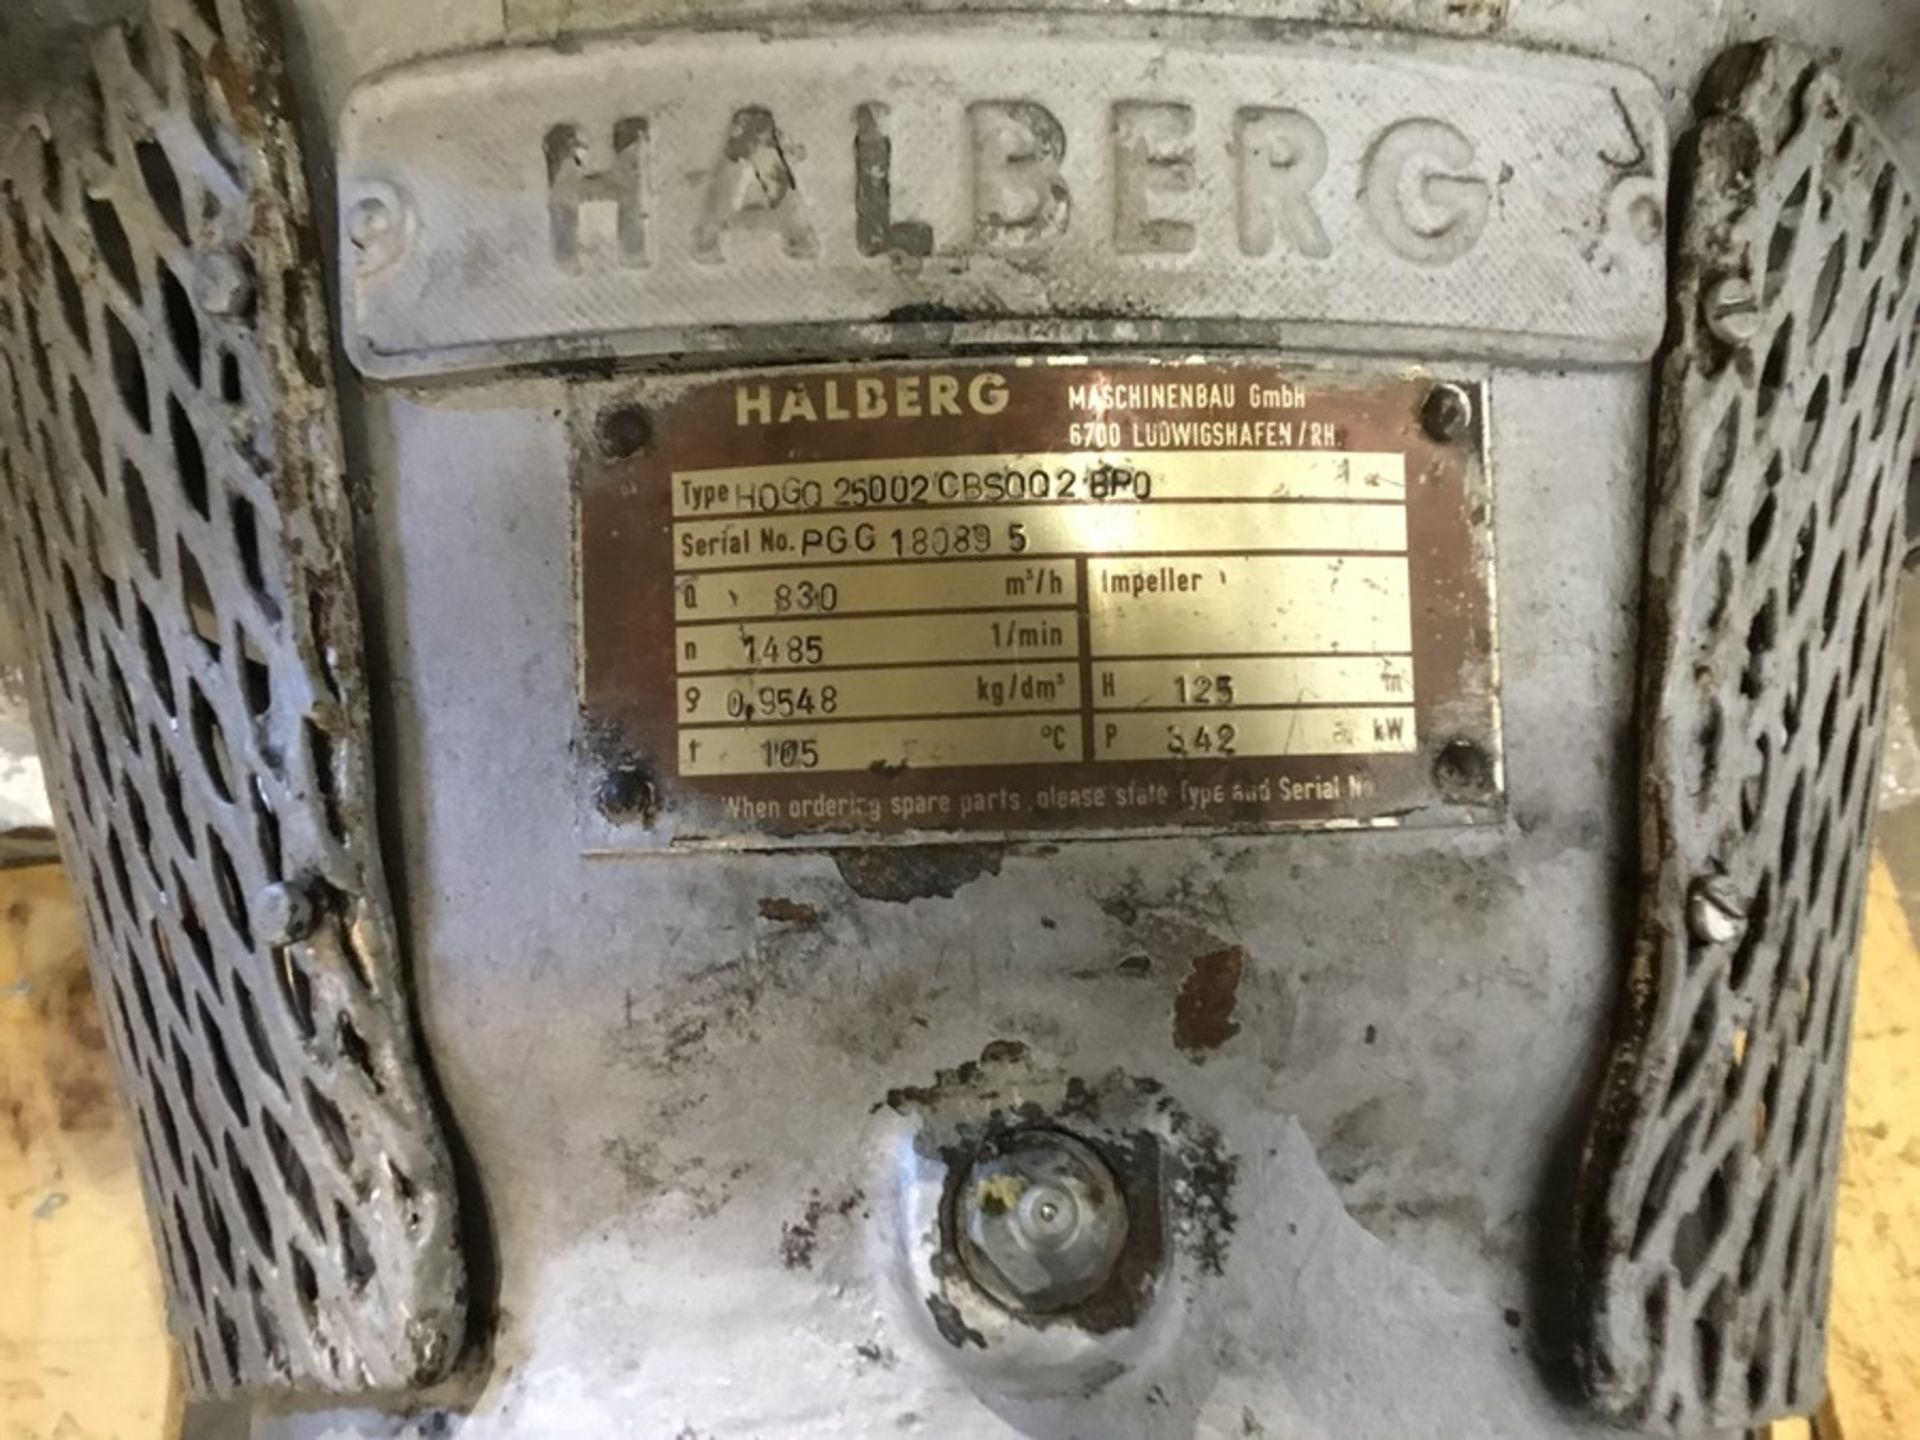 Halberg model HOGQ25002cbsqq2bqo Pump Flow: 830m/hour-0.9548kg/dm3 Pressure:125Metre head, - Image 21 of 24